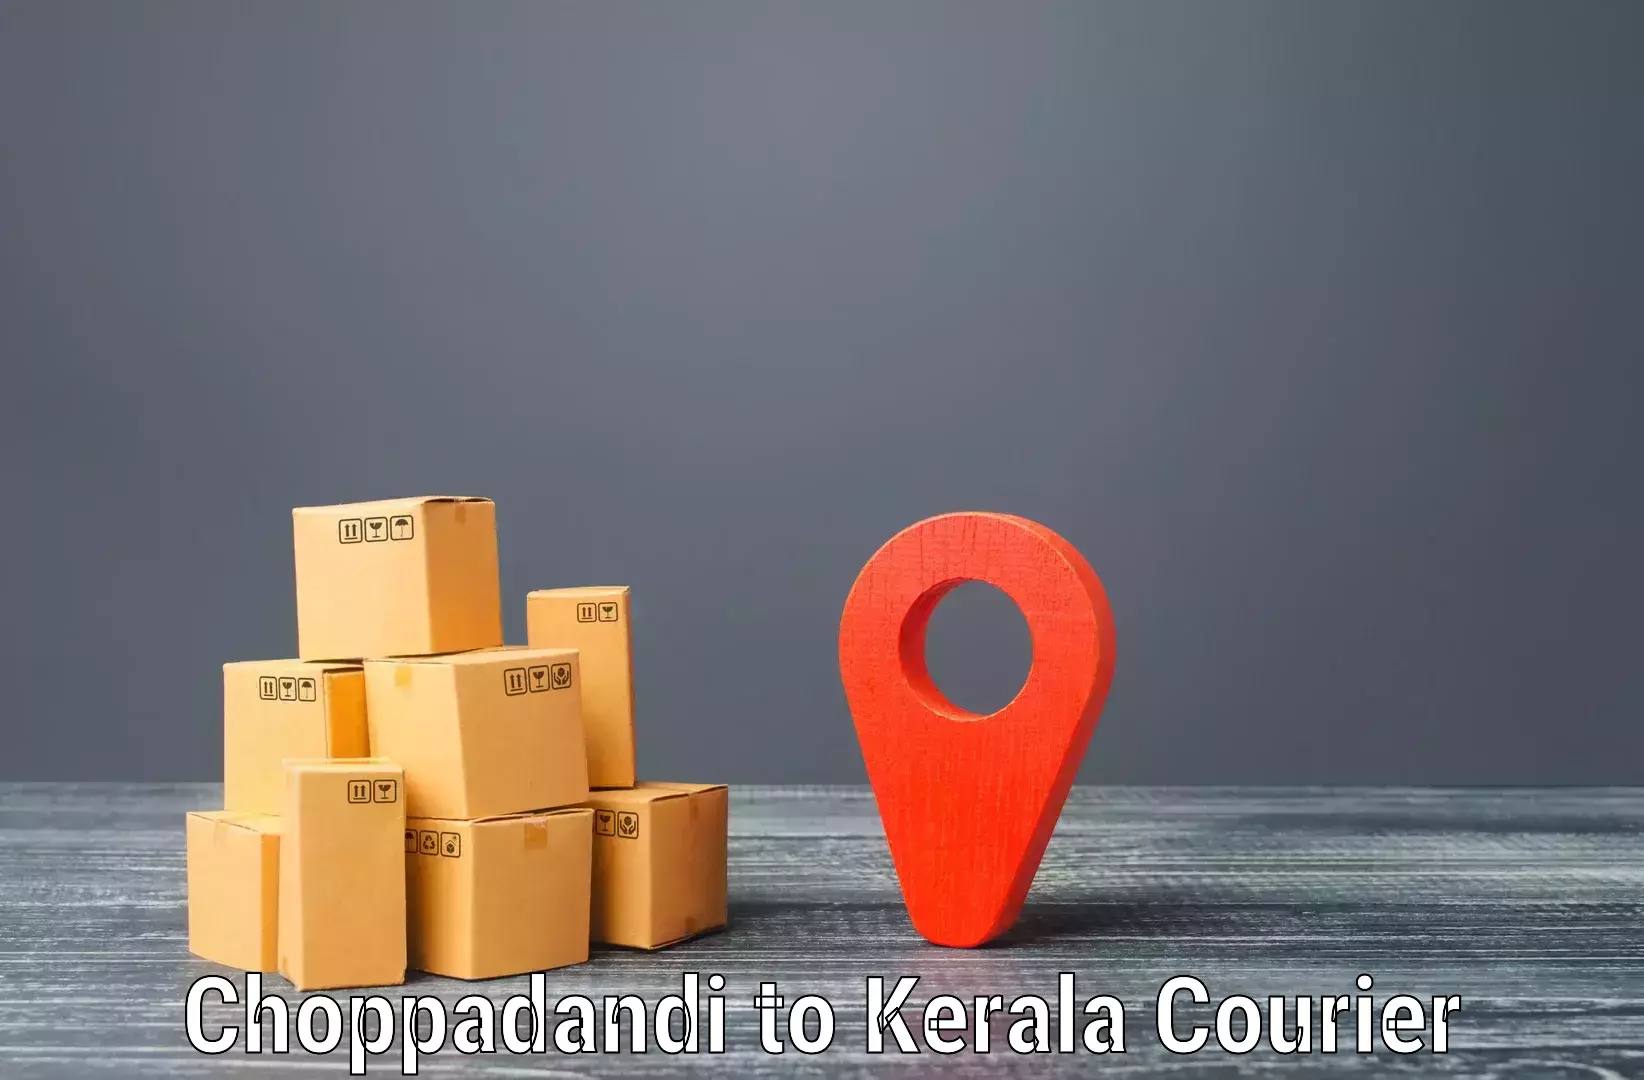 Express delivery capabilities Choppadandi to Ponnani